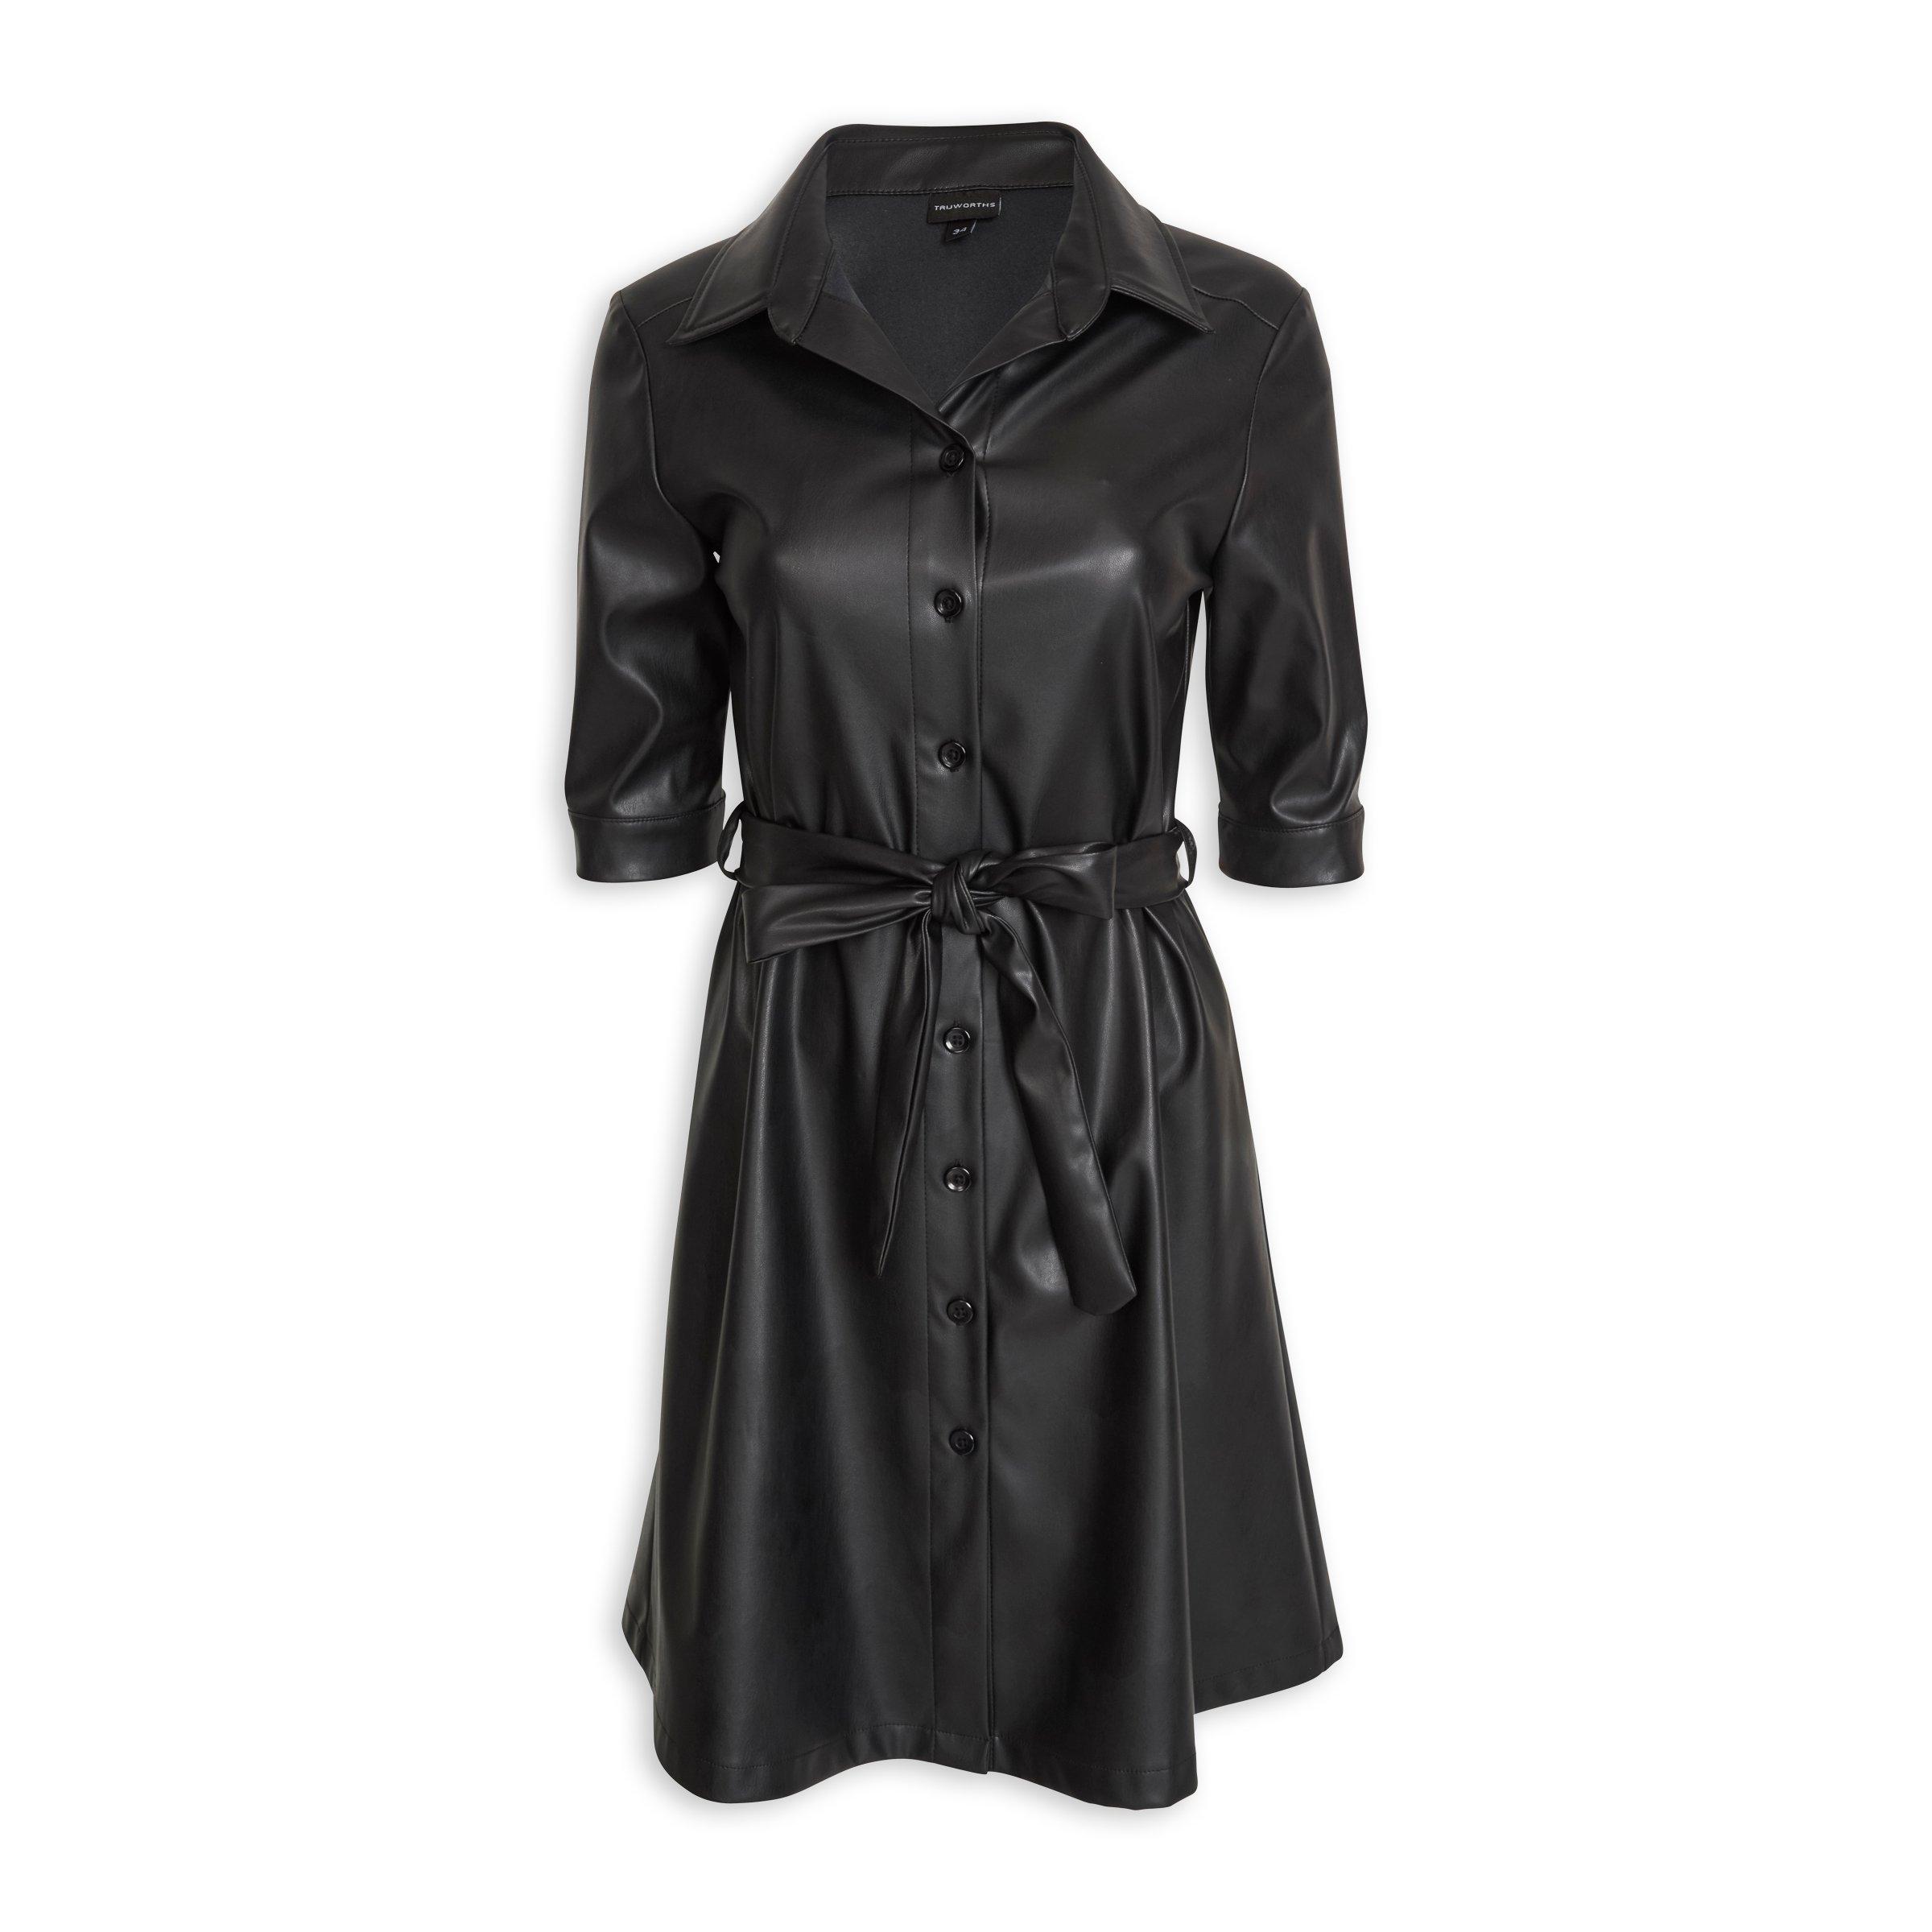 Buy Truworths Black Pleather Dress Online | Truworths